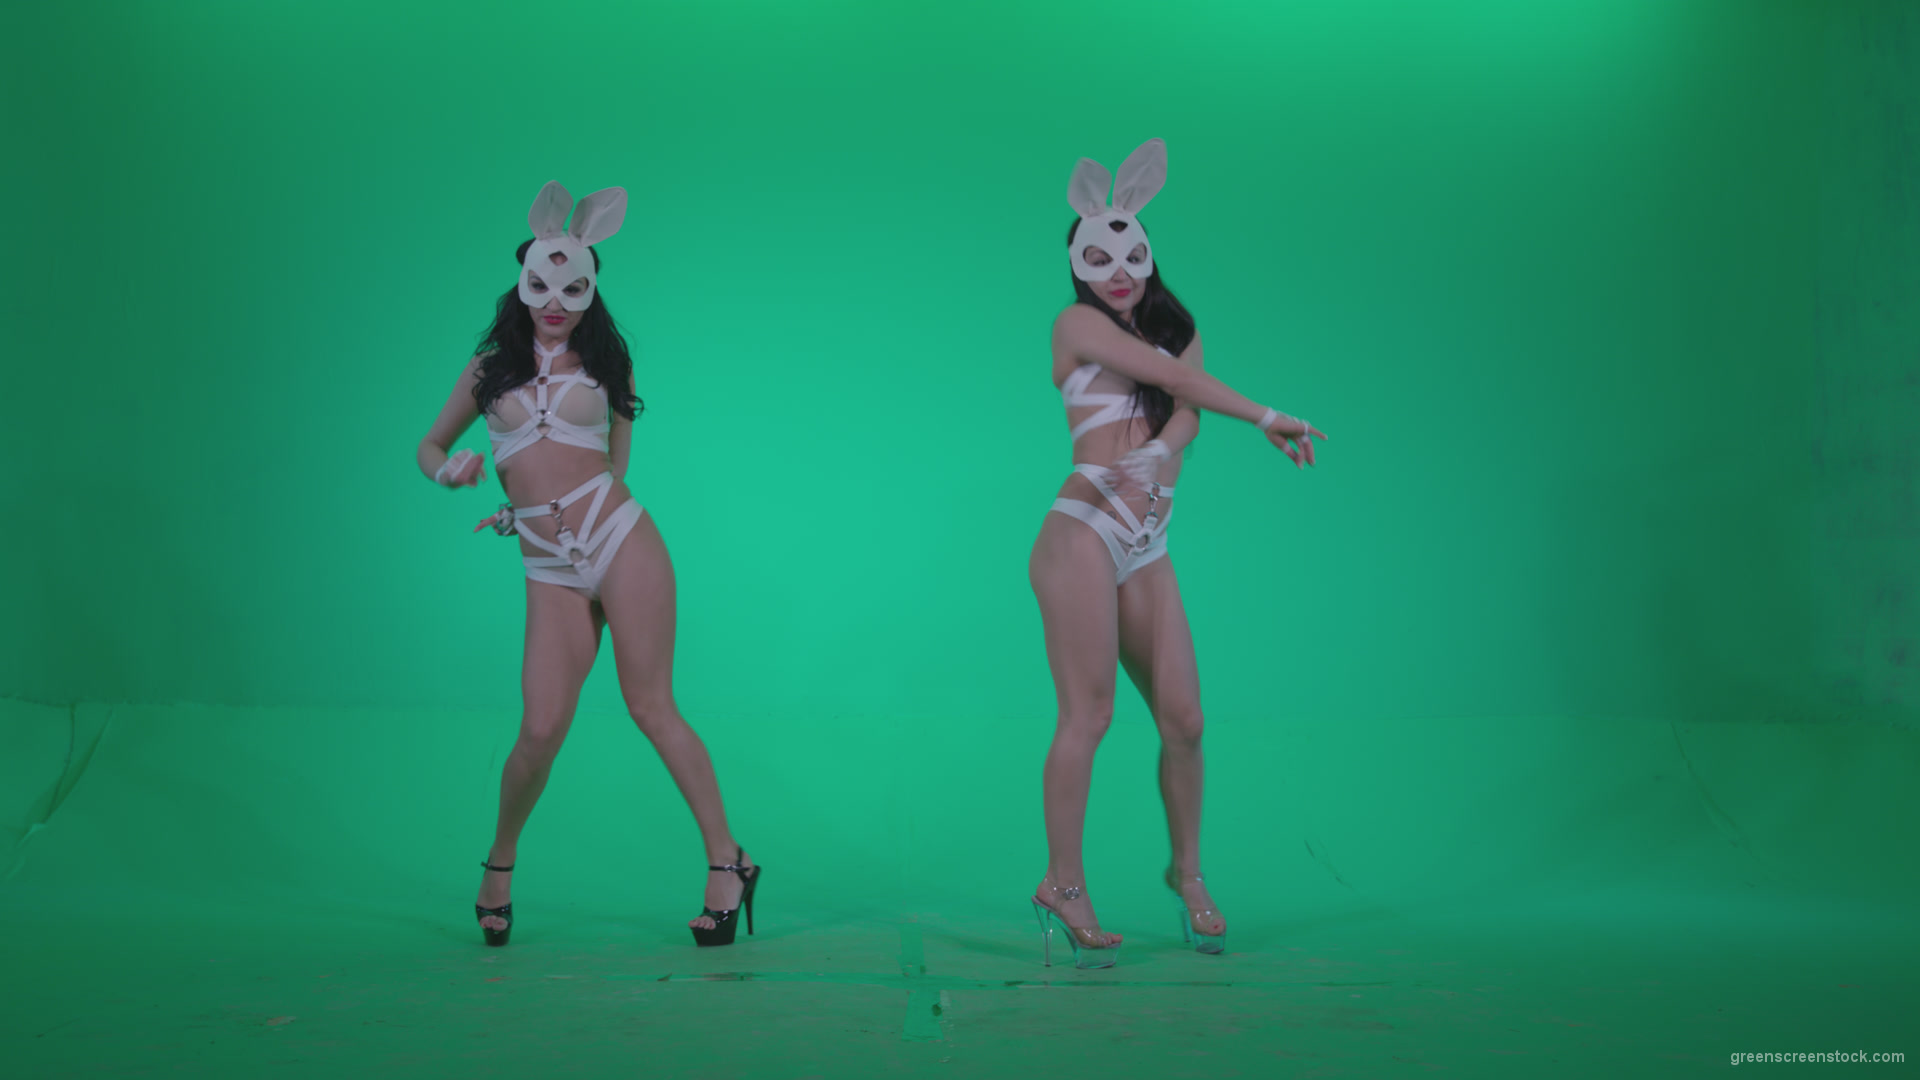 Go-go-Dancer-White-Rabbit-m1-Green-Screen-Video-Footage_007 Green Screen Stock